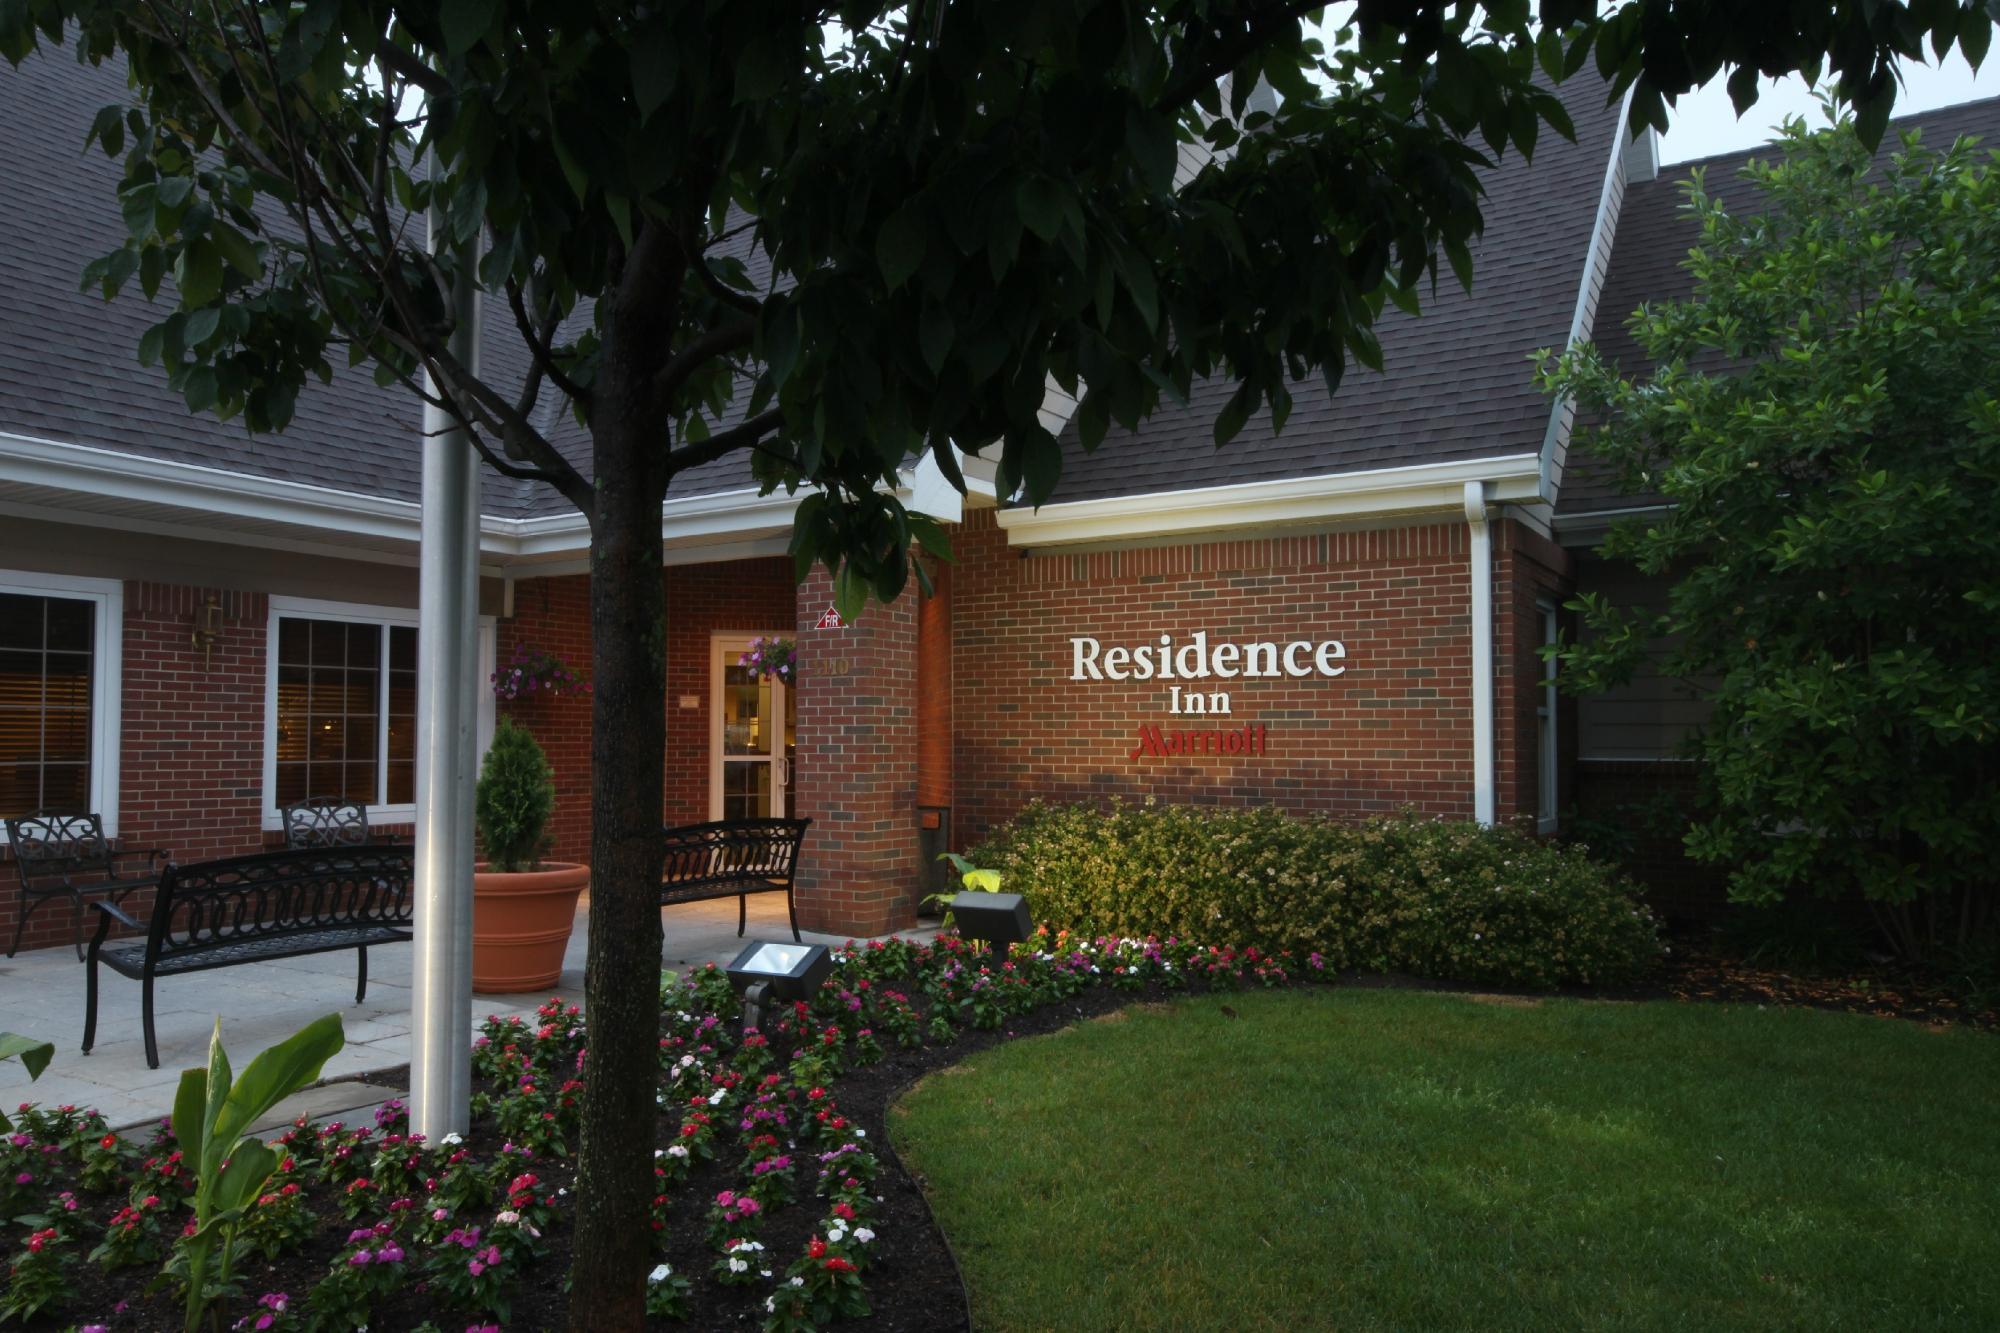 Photo of Residence Inn Philadelphia Montgomeryville, North Wales, PA